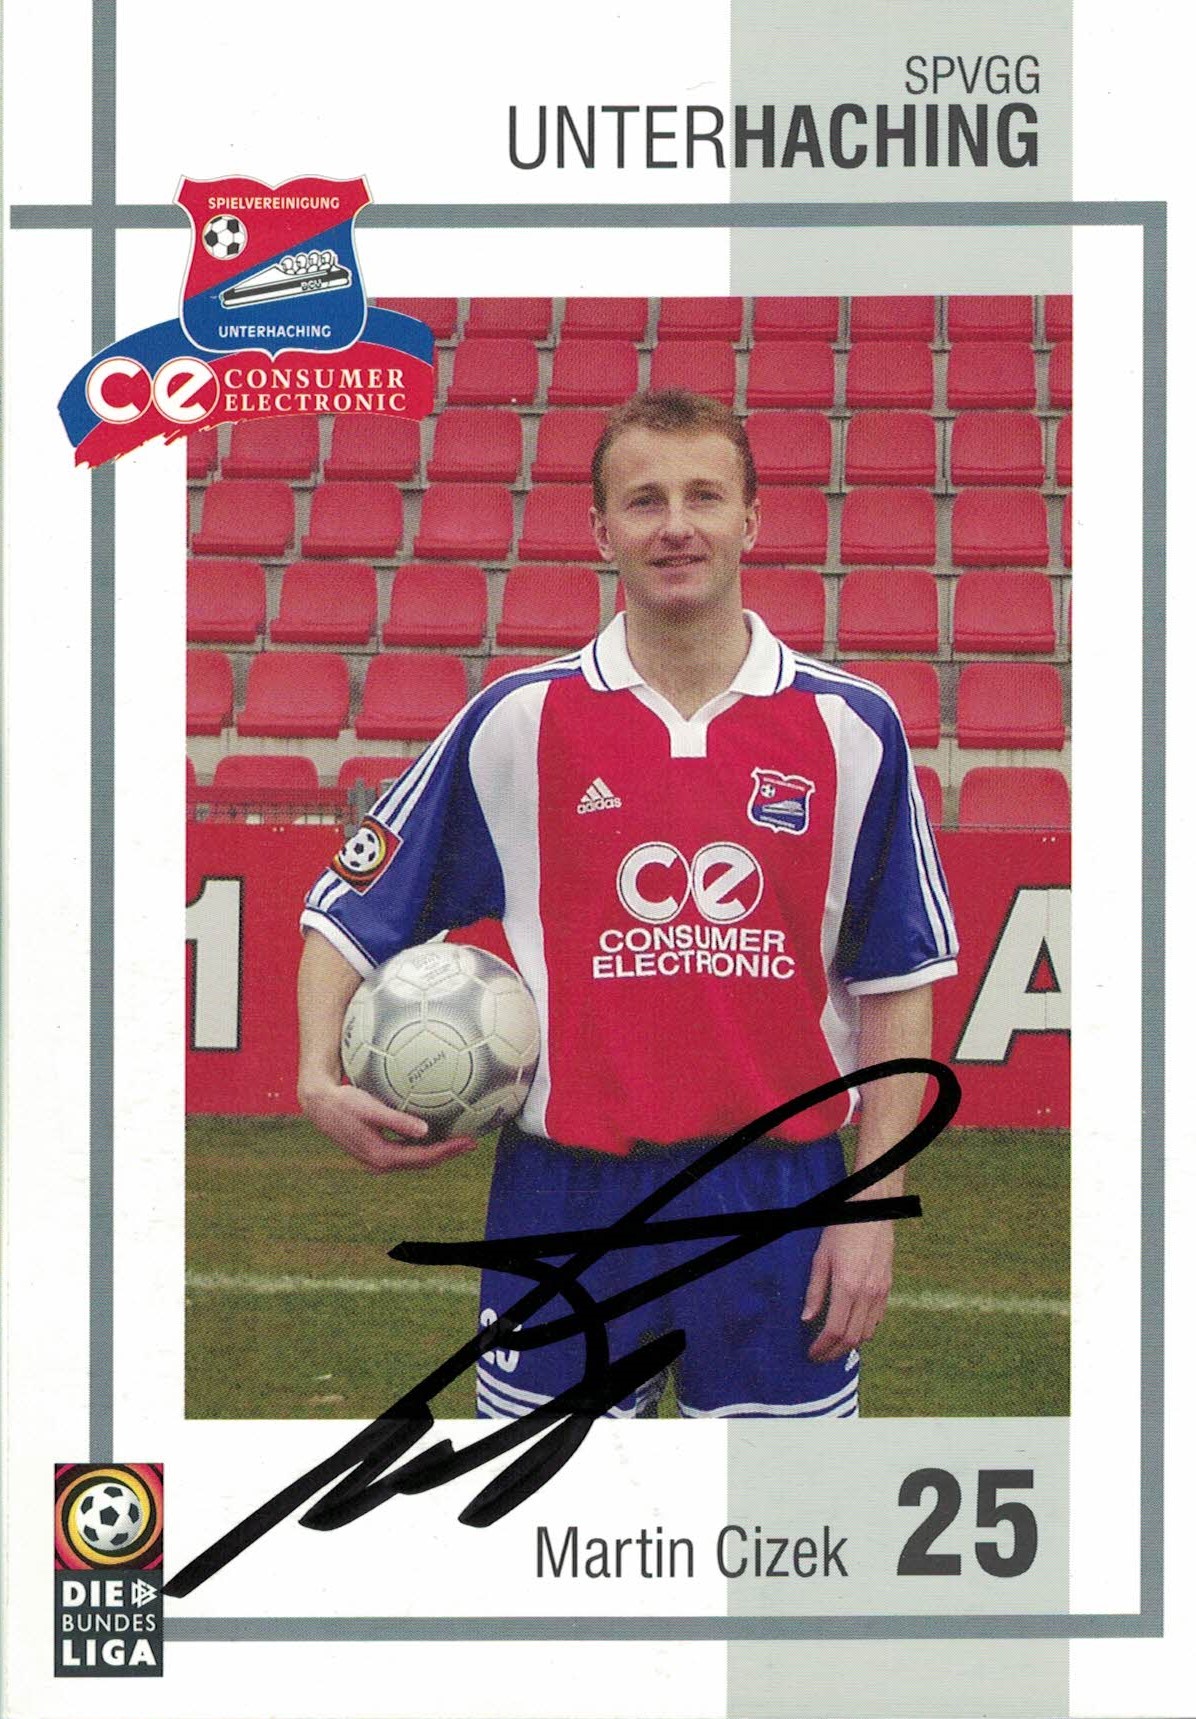 Martin Cizek Sp Vgg Unterhaching 2000/01 Podpisova karta autogram